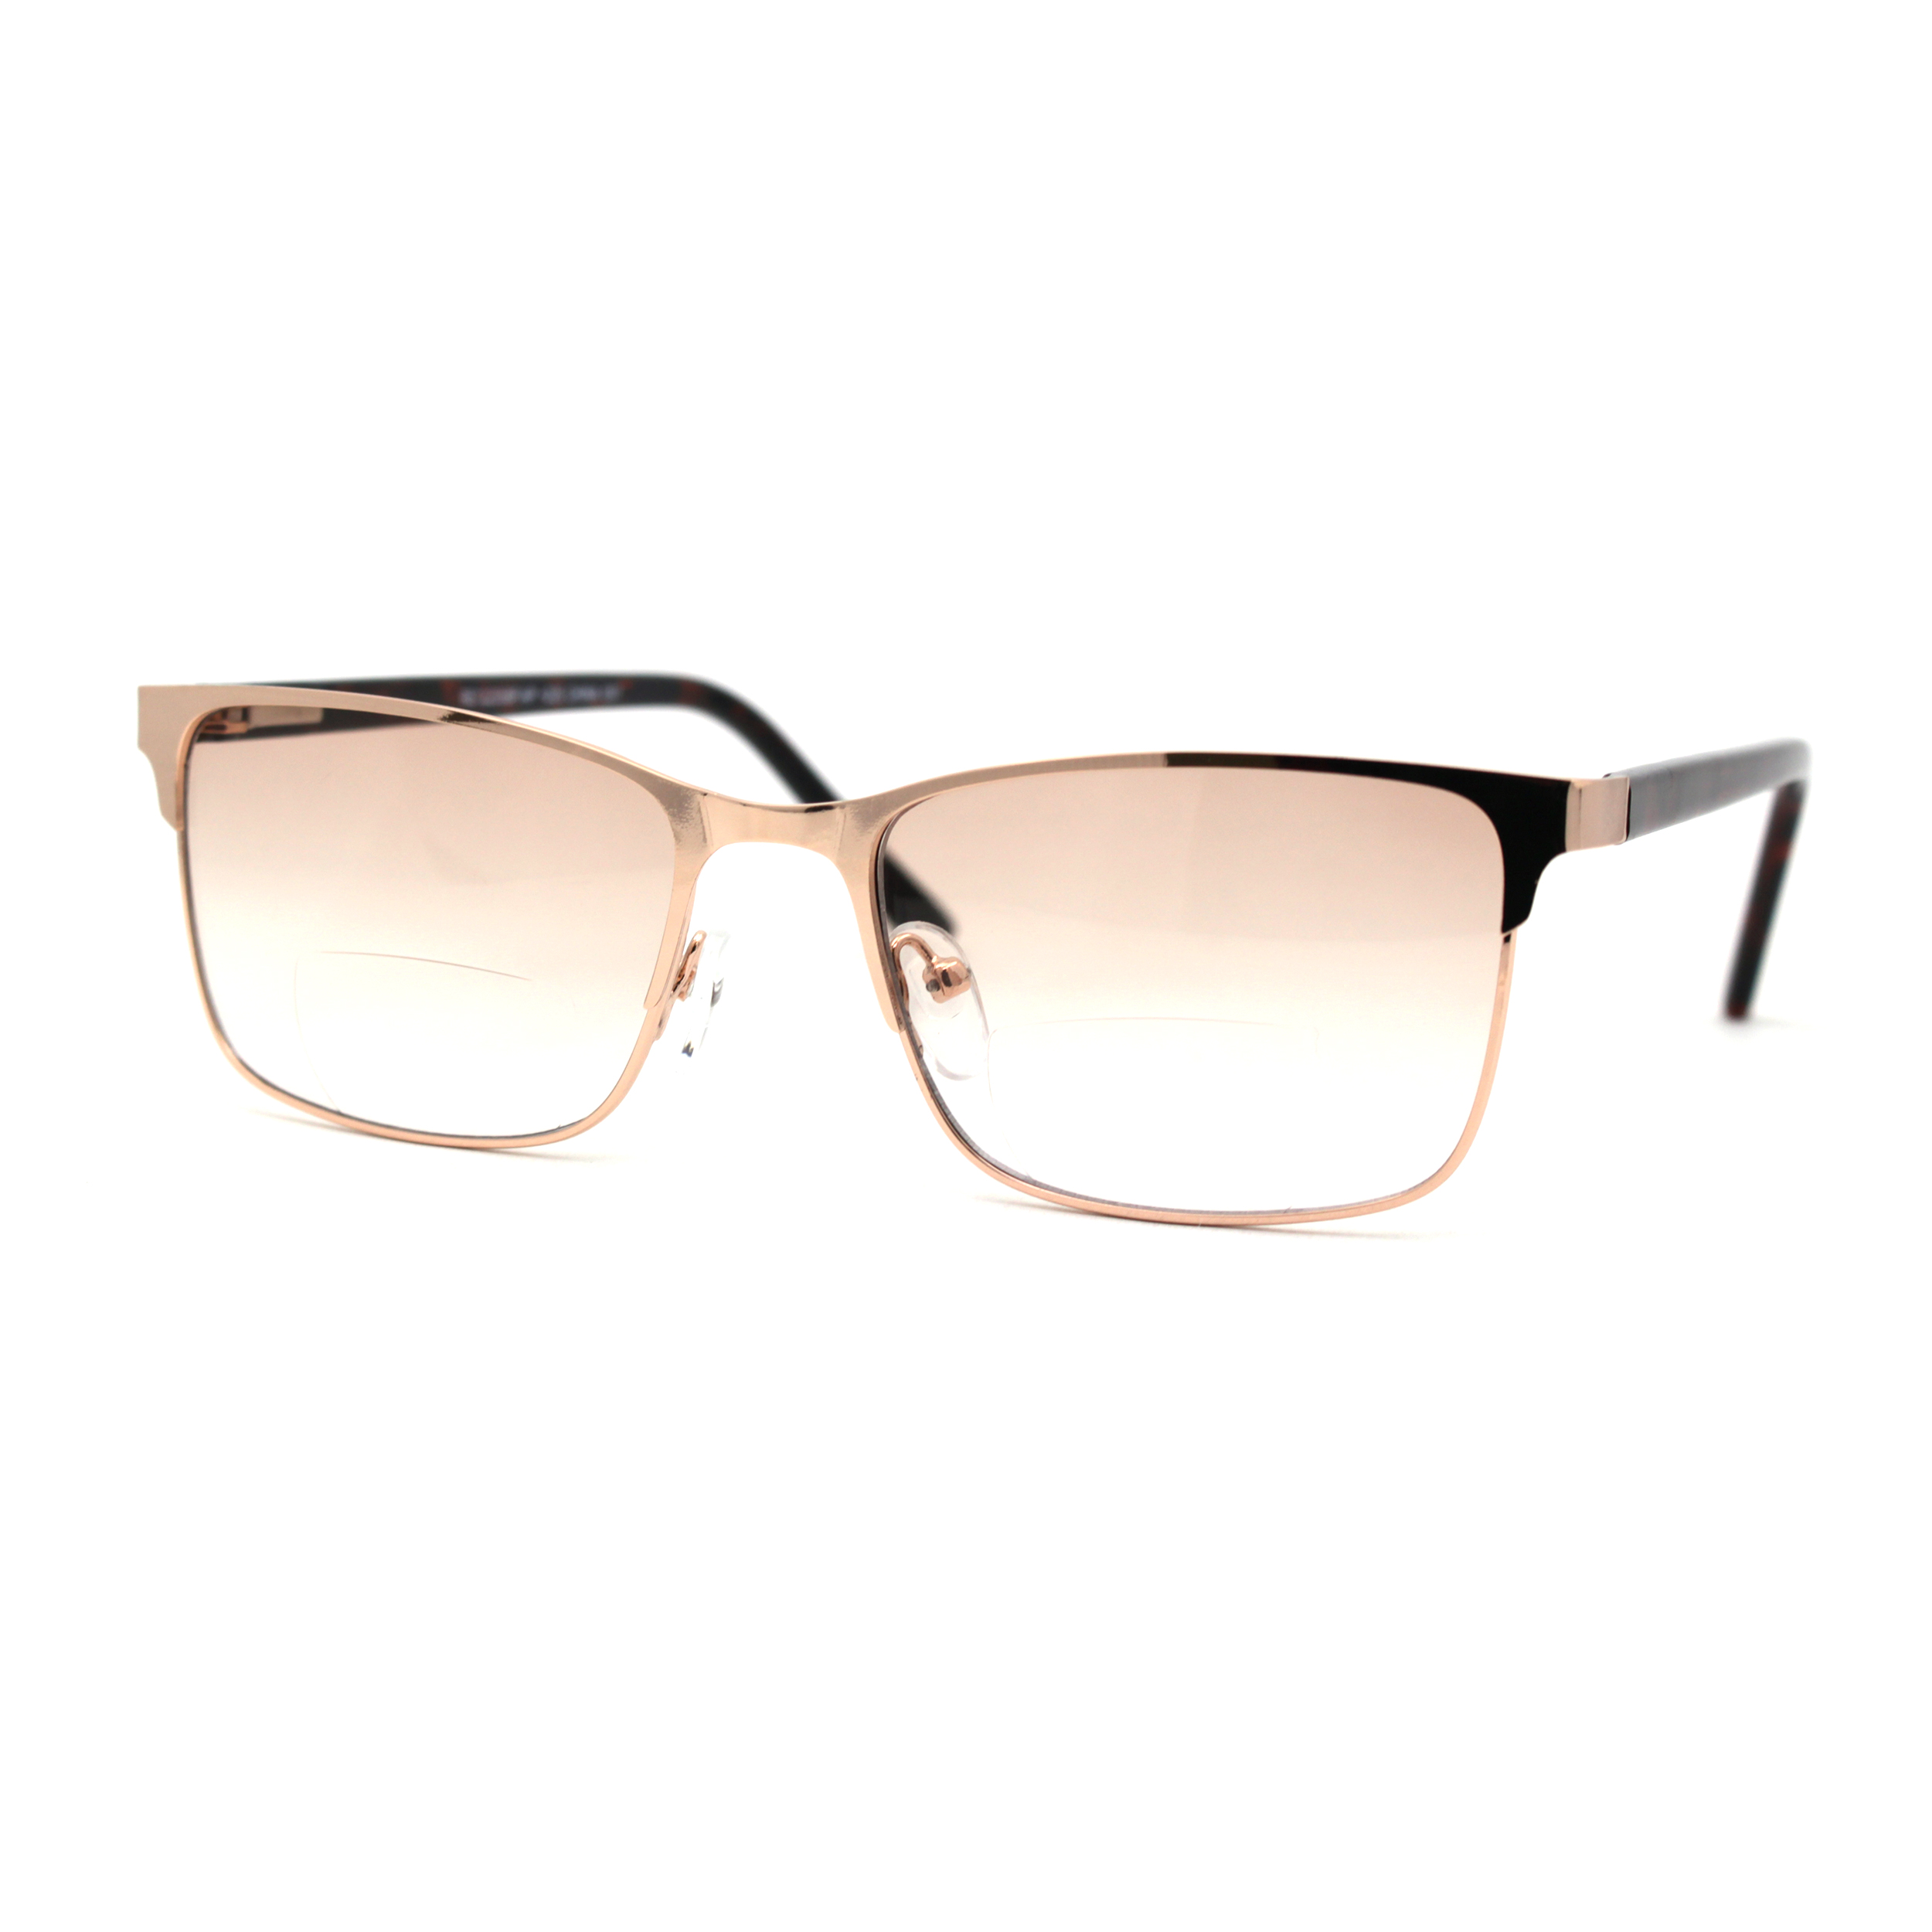 Mens Metal Half Rim Rectangular Bifocal Light Sunglasses Reader Gold +2.0 - image 1 of 4